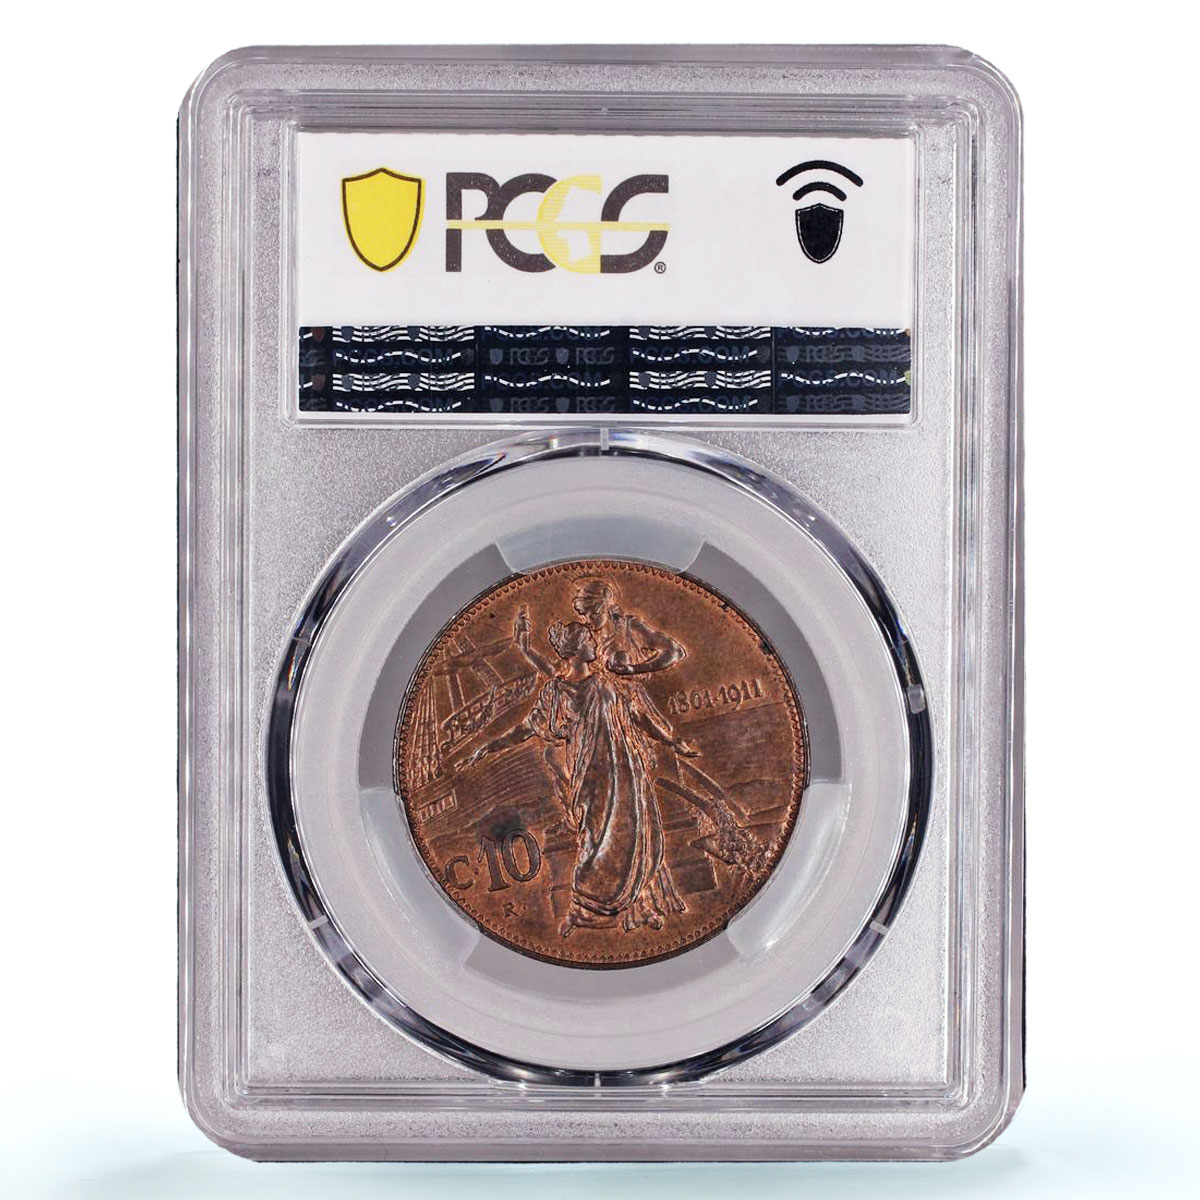 Italy 10 centesimi Emanuele III Kingdom Anniversary KM-51 MS63 BN PCGS coin 1911